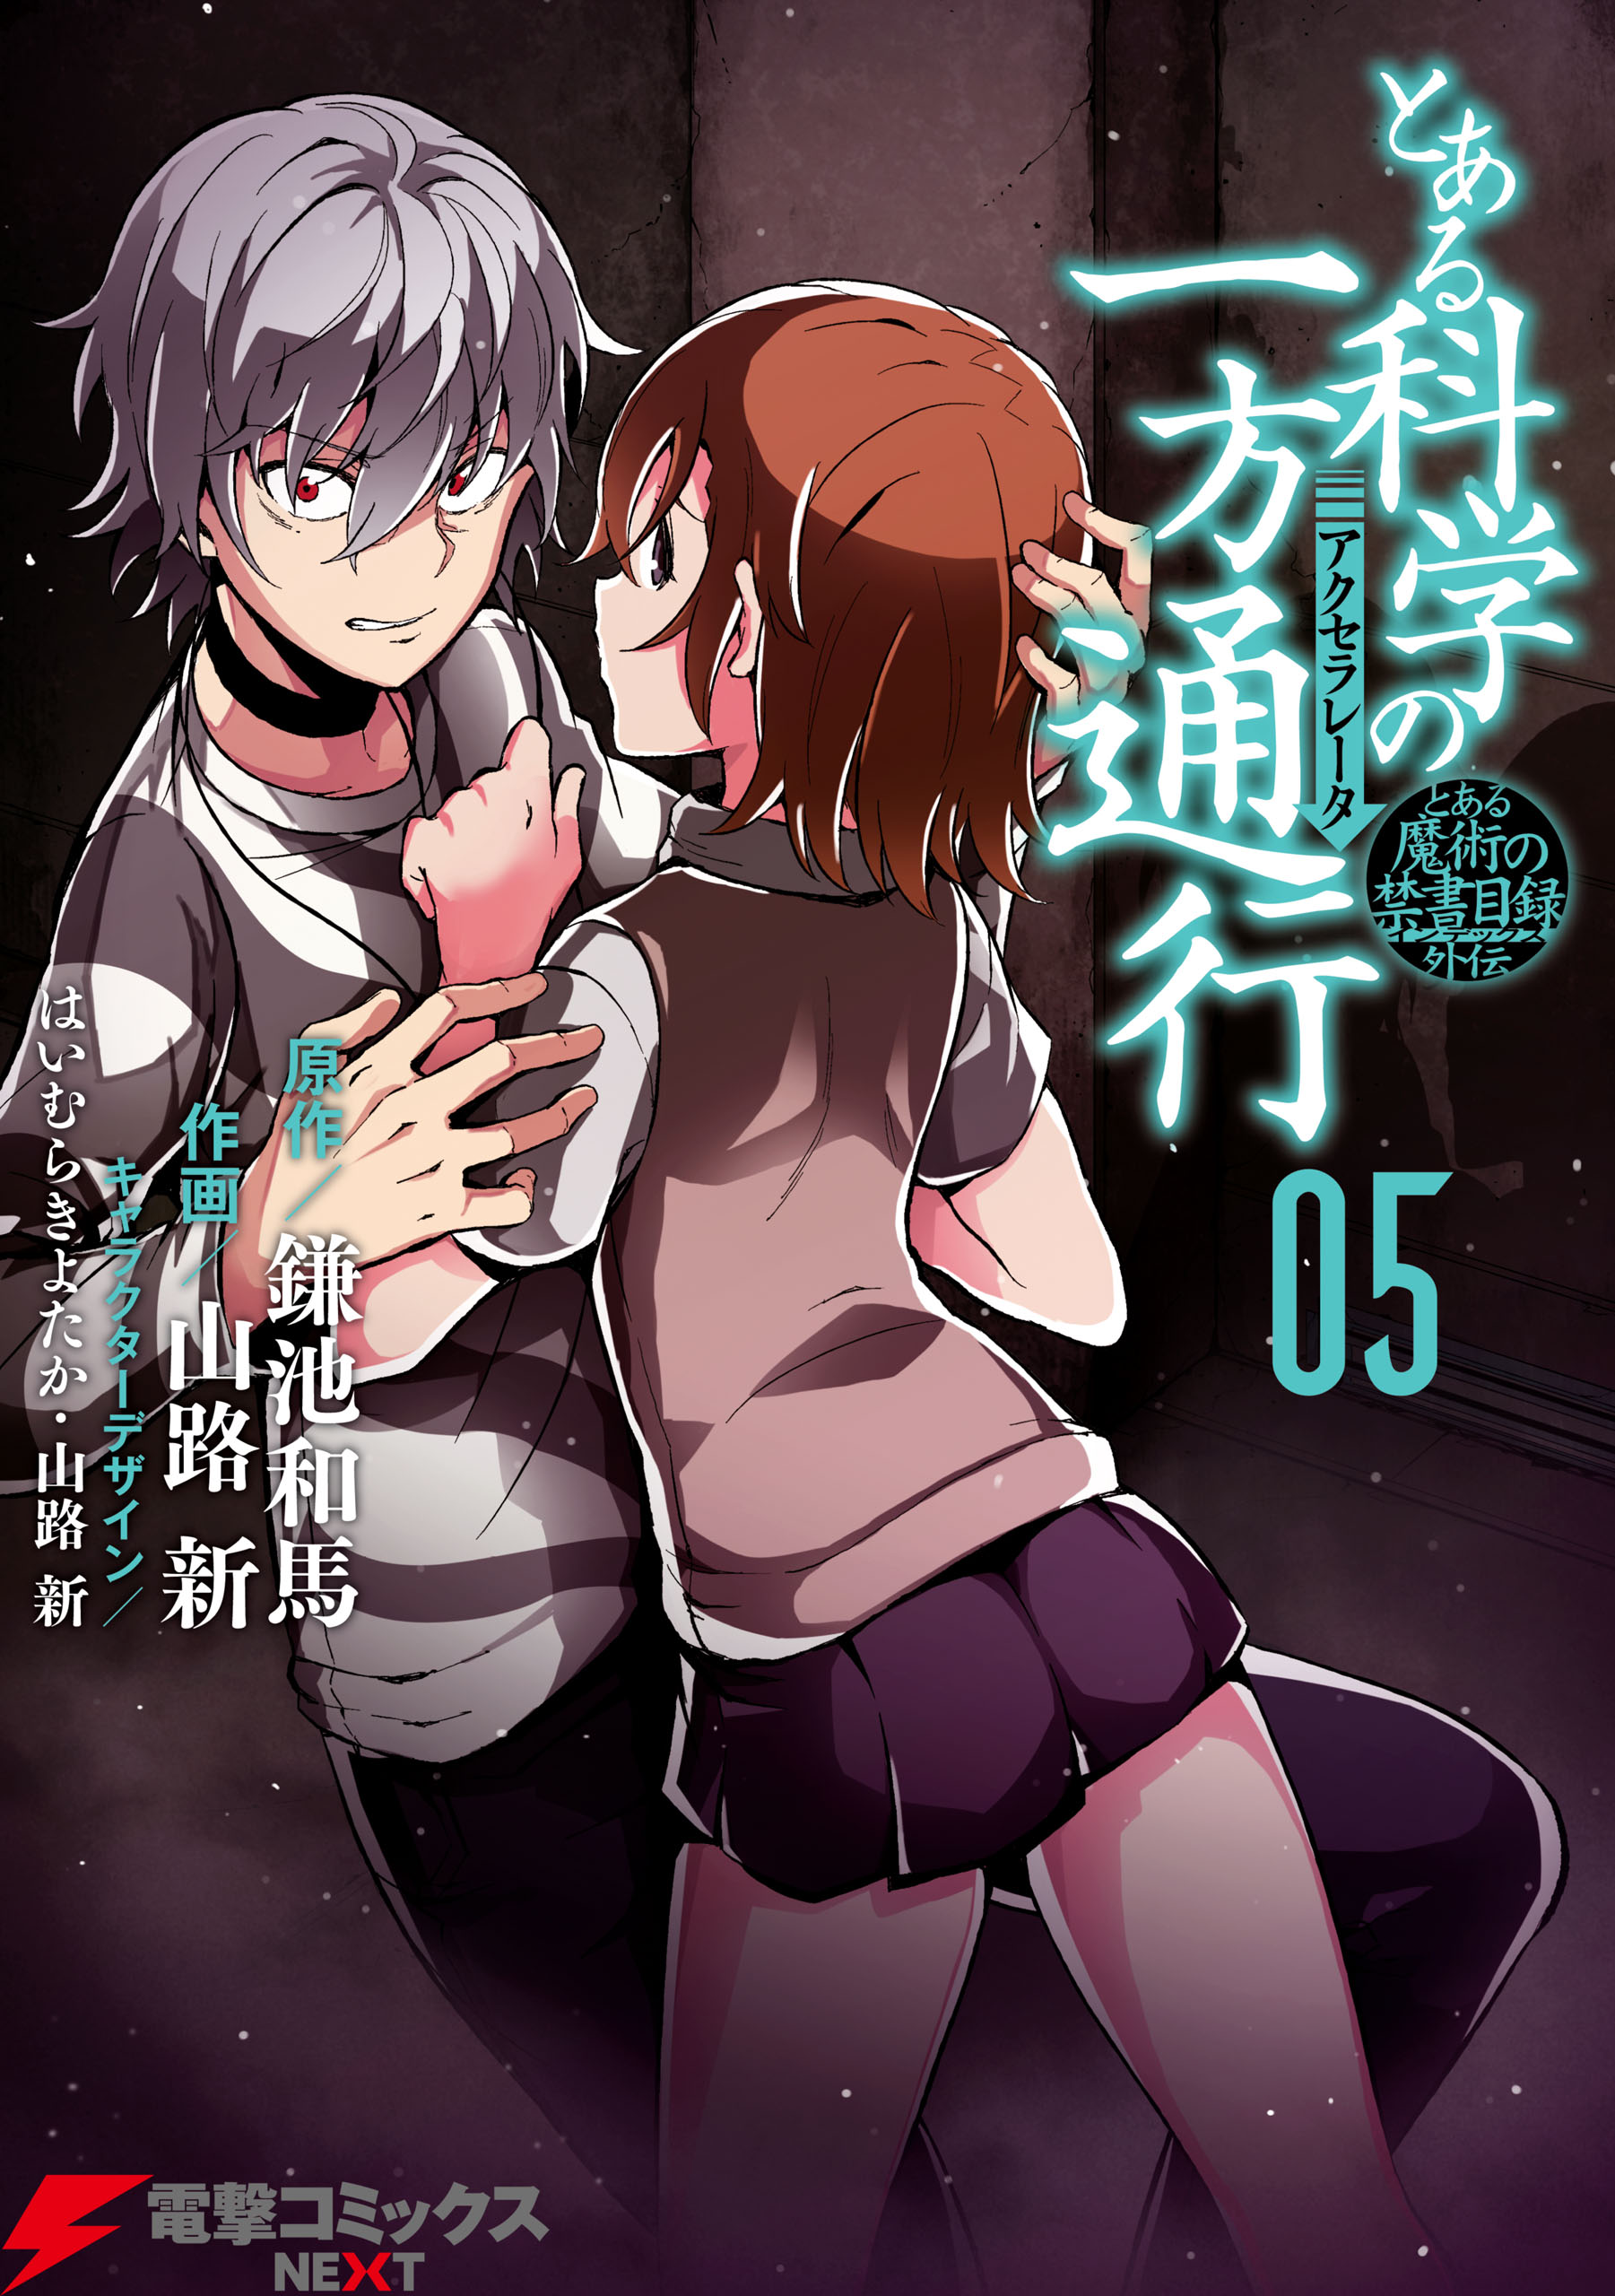 Licensed To Aru Kagaku no Accelerator - Manga Discussion - Page 43 -  AnimeSuki Forum